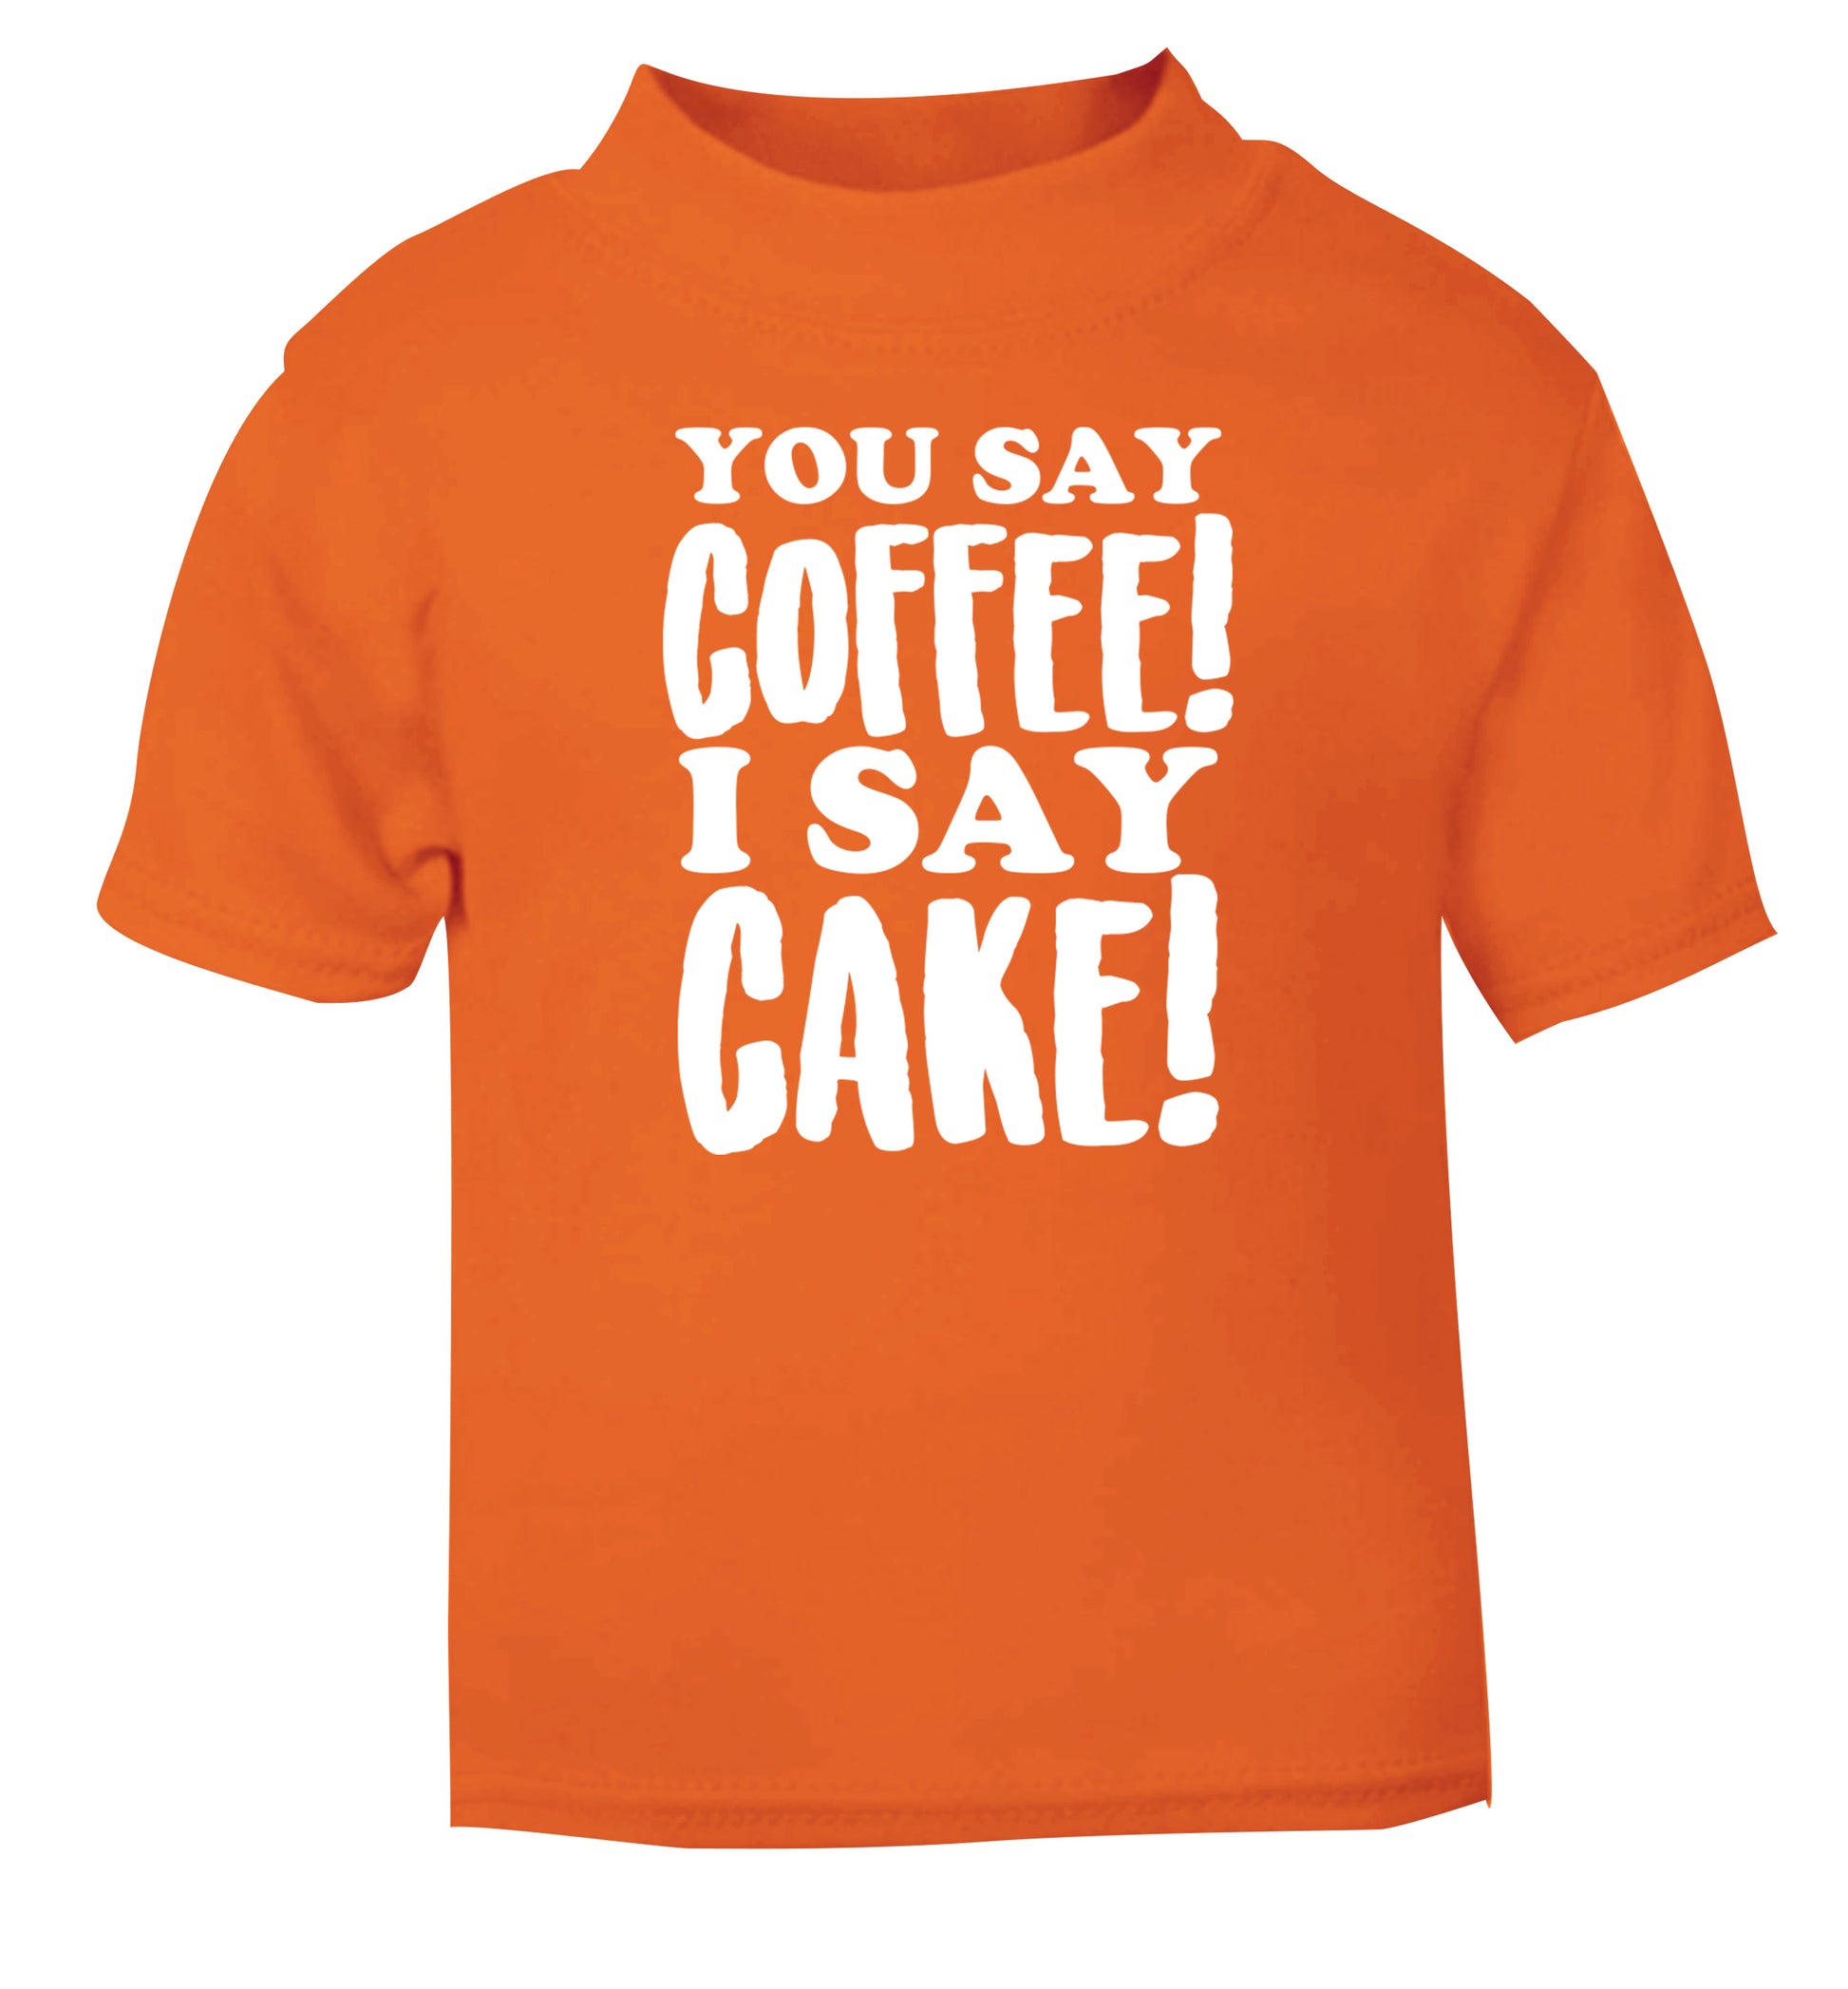 You say coffee I say cake! orange Baby Toddler Tshirt 2 Years